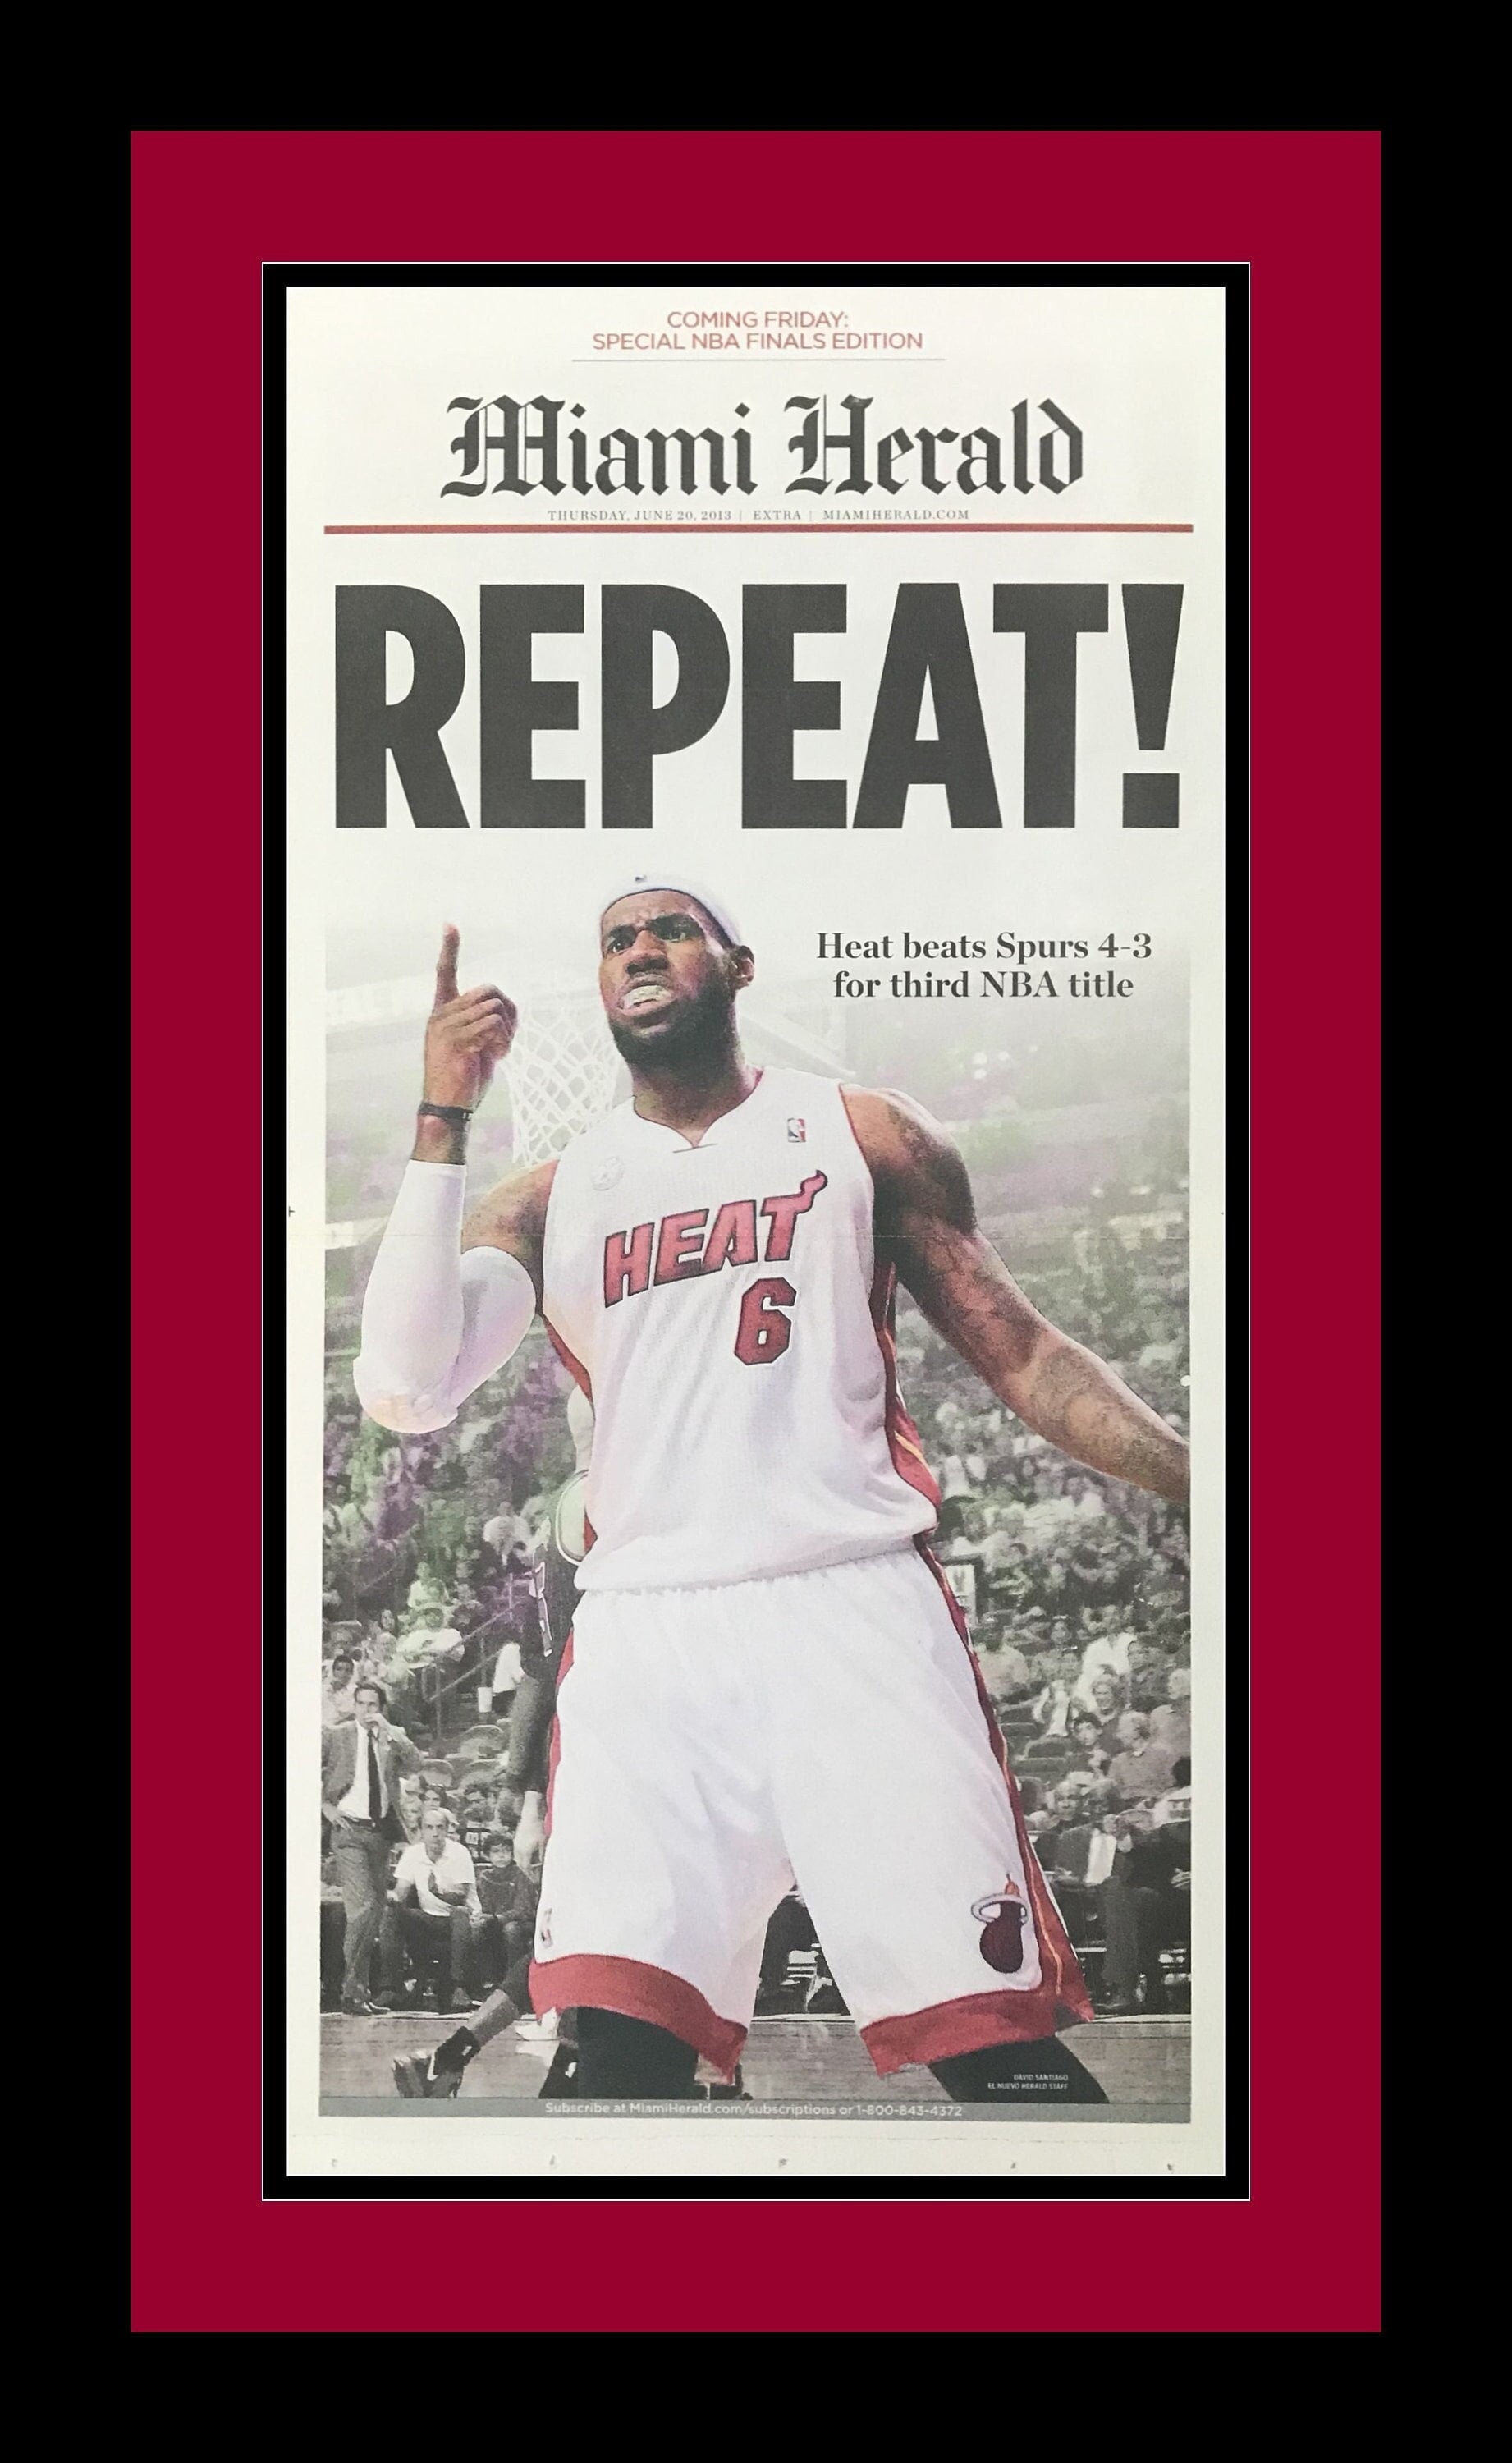 Miami Heat top San Antonio Spurs, repeat as NBA champs